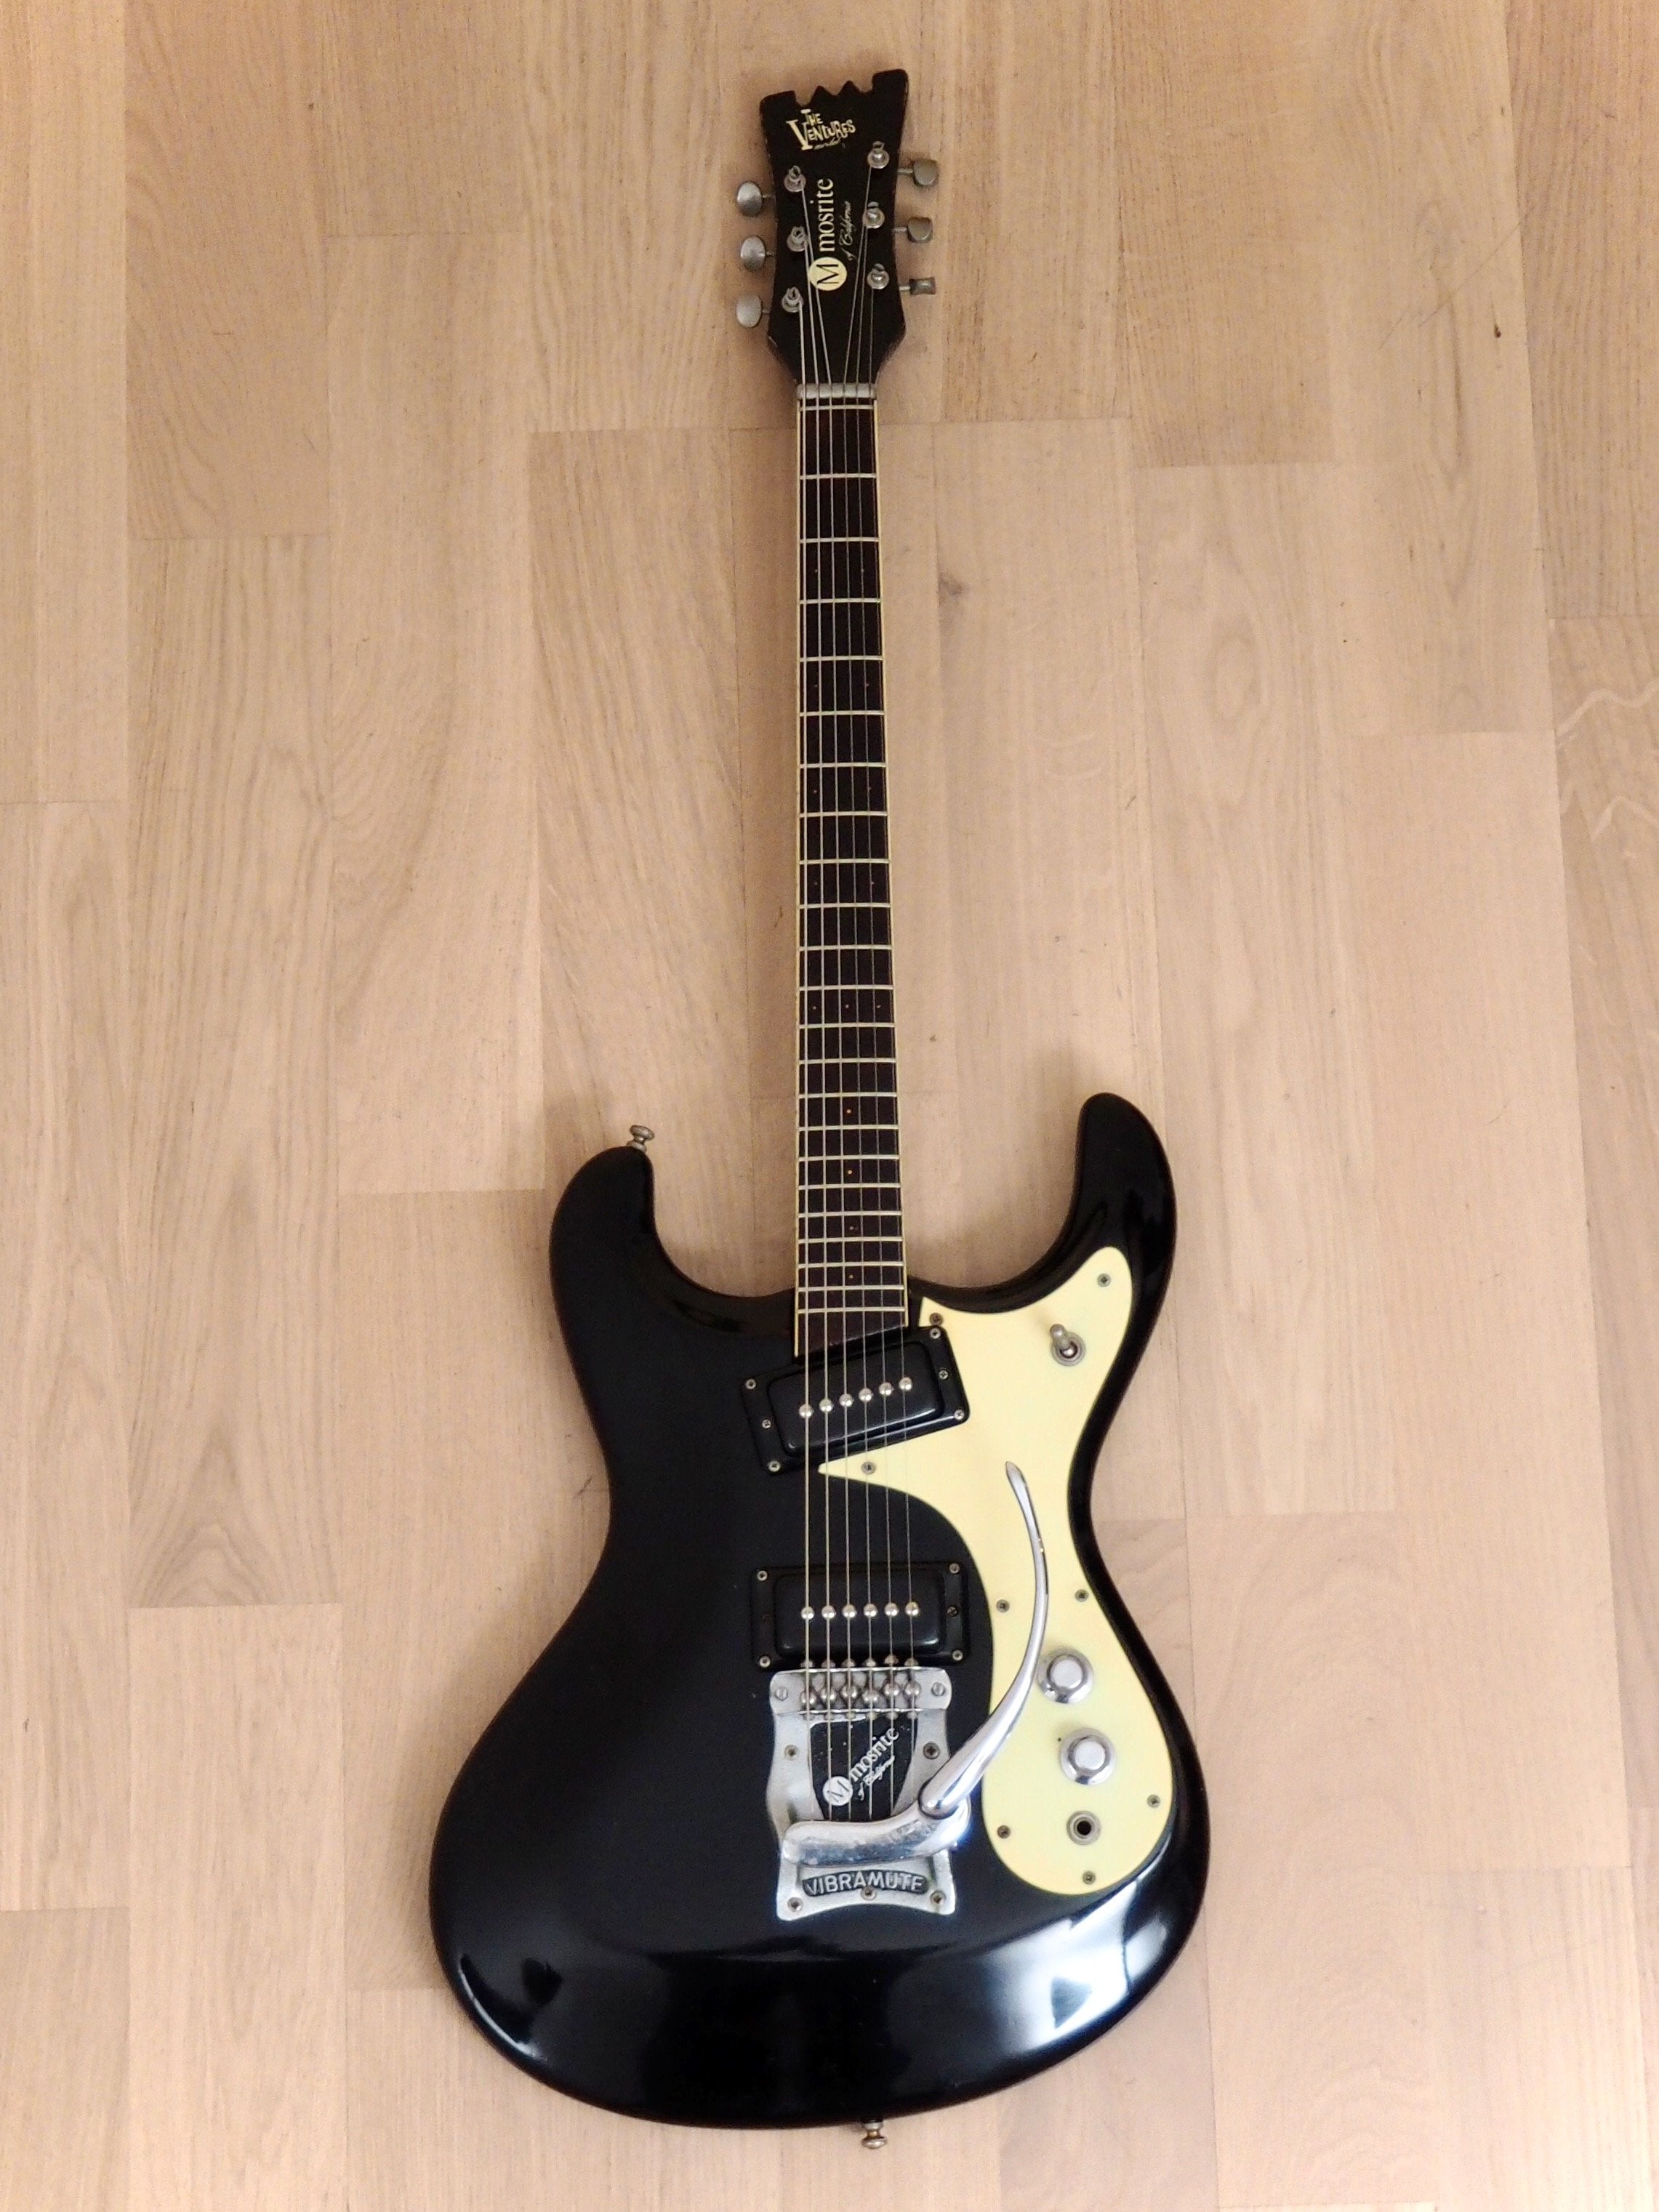 1964 Mosrite Ventures Model Vintage Electric Guitar Black, Vibramute w/ Case